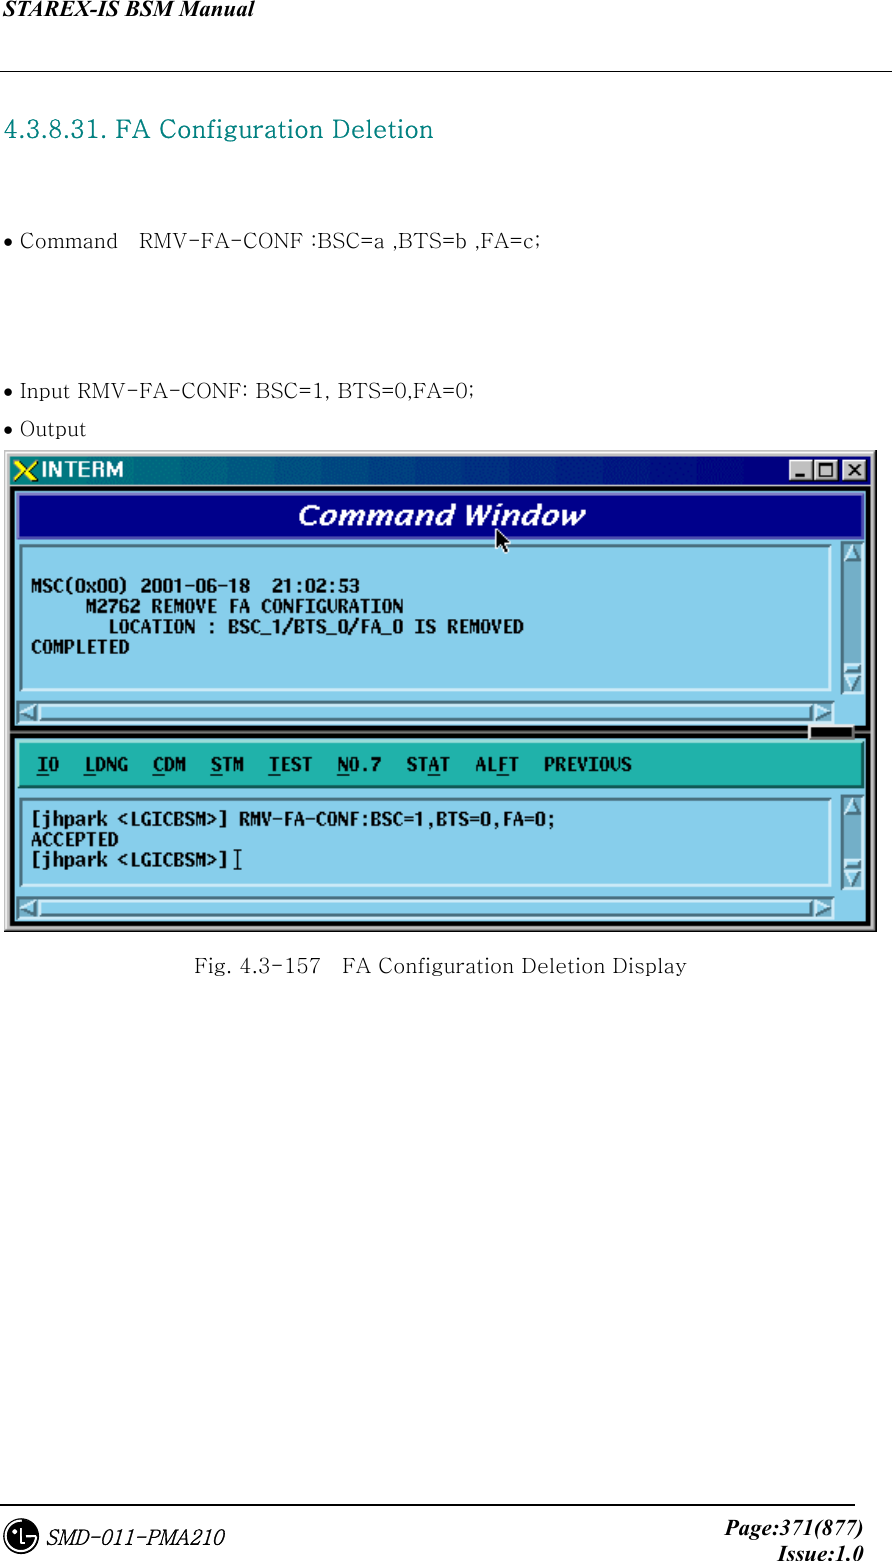 STAREX-IS BSM Manual     Page:371(877)Issue:1.0SMD-011-PMA210  4.3.8.31. FA Configuration Deletion    • Command    RMV-FA-CONF :BSC=a ,BTS=b ,FA=c;    • Input RMV-FA-CONF: BSC=1, BTS=0,FA=0; • Output  Fig. 4.3-157    FA Configuration Deletion Display